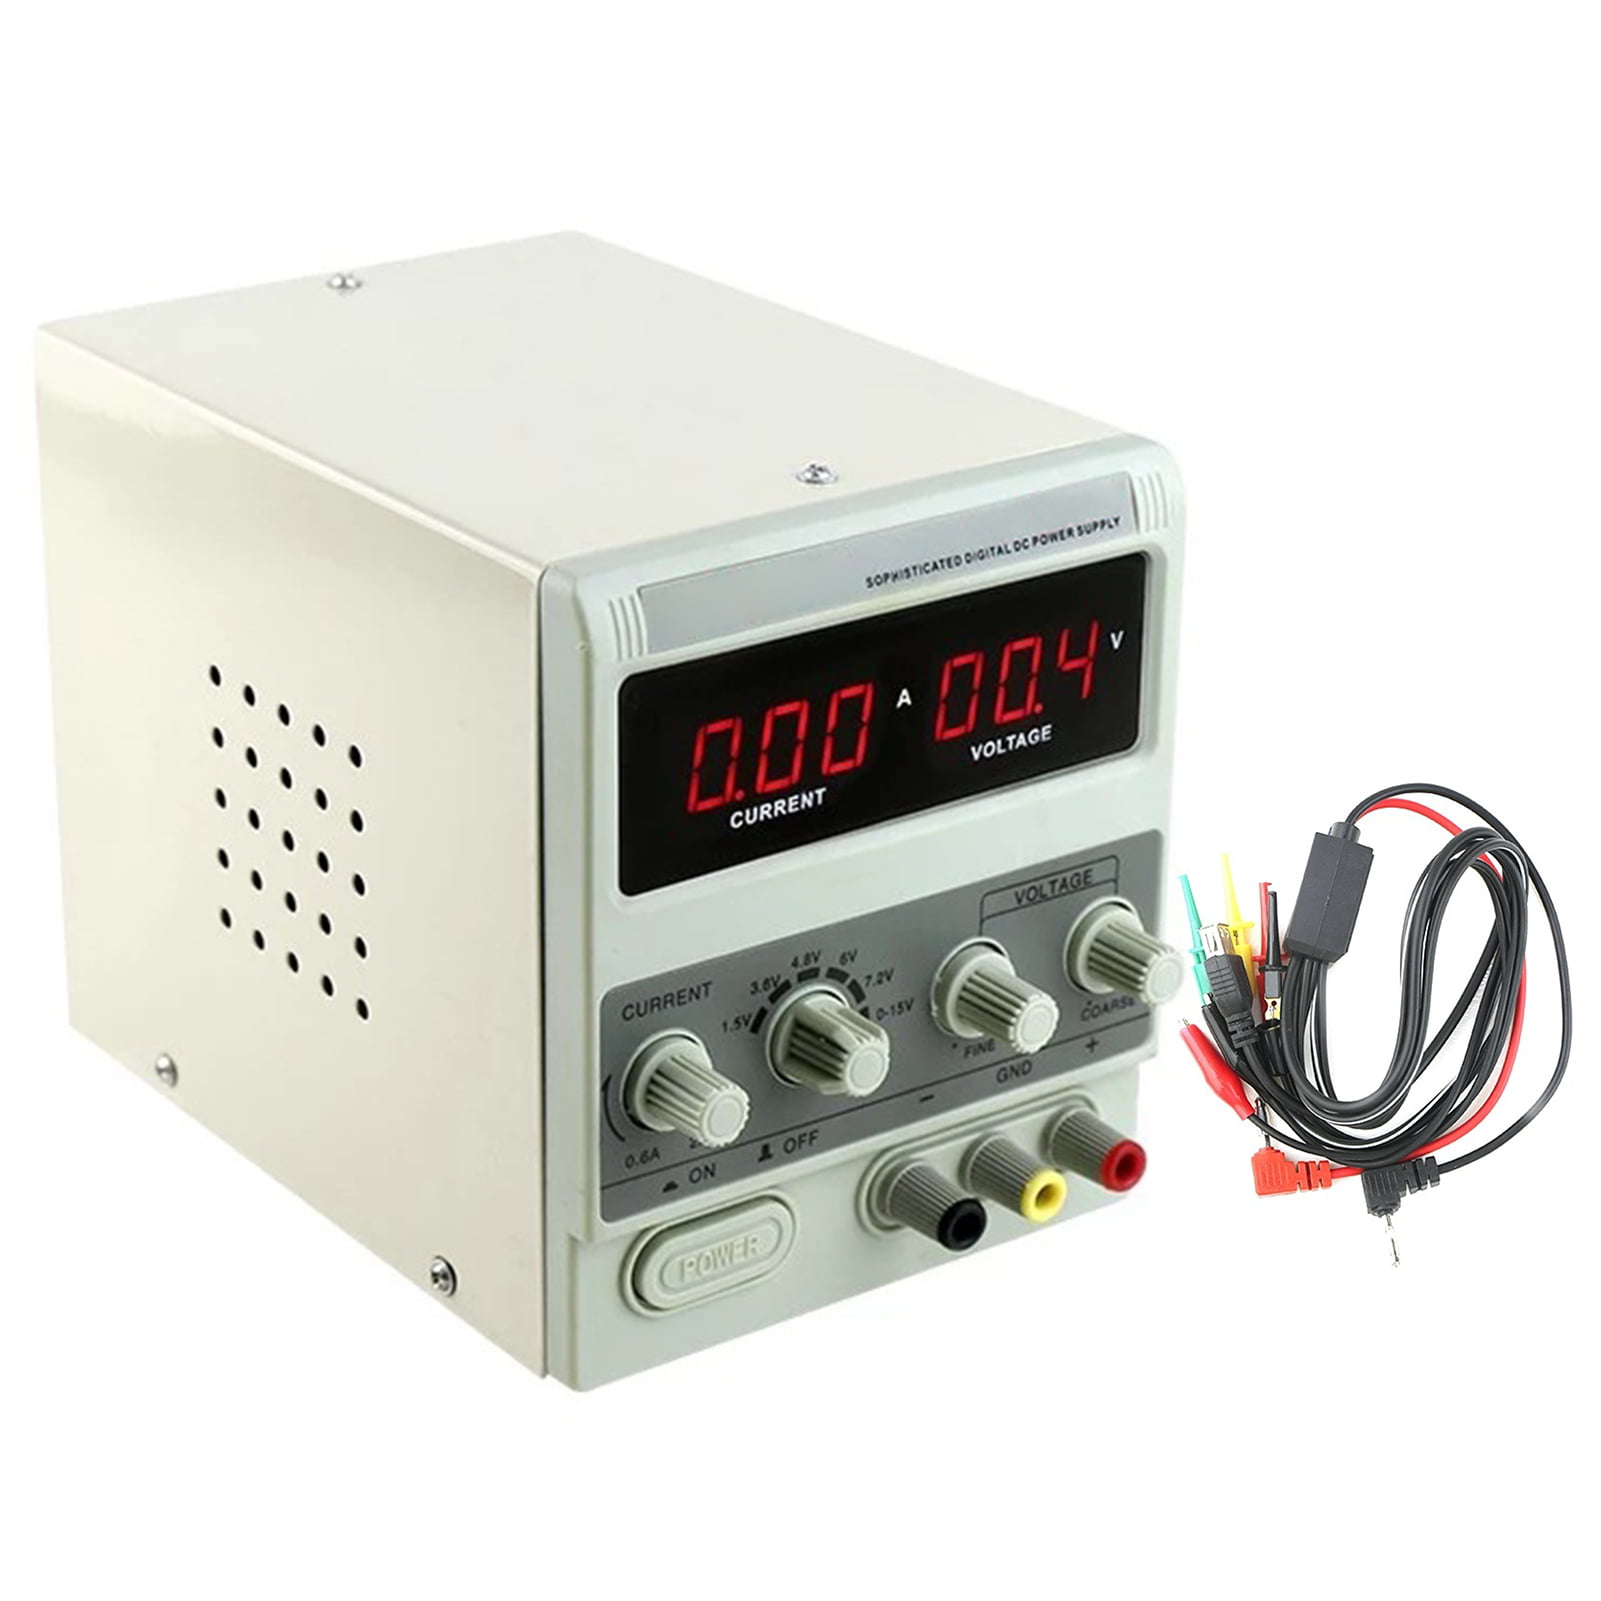 15V 2A Adjustable DC Power Supply Precision Variable Dual Digital Lab Test 110V 